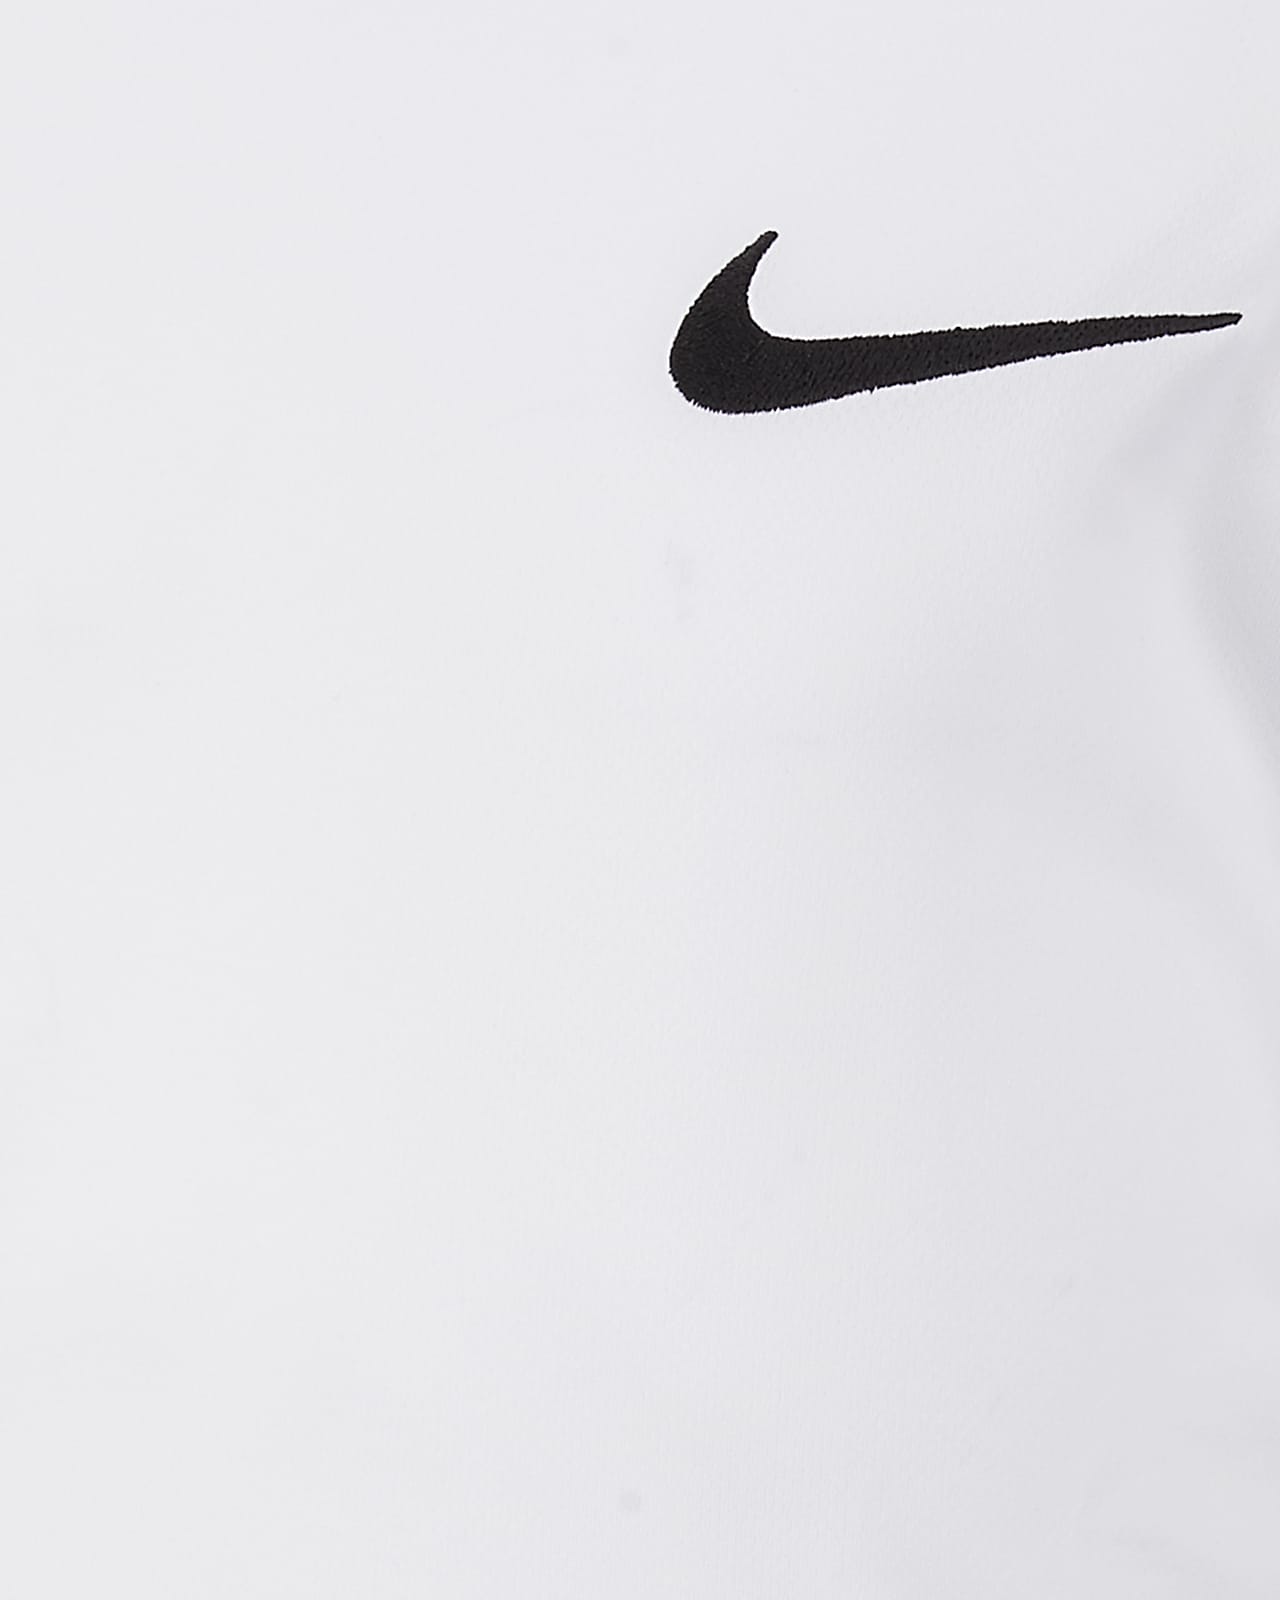 Nike Dri-FIT Older Kids' (Boys') Short-Sleeve Training Top. Nike PH